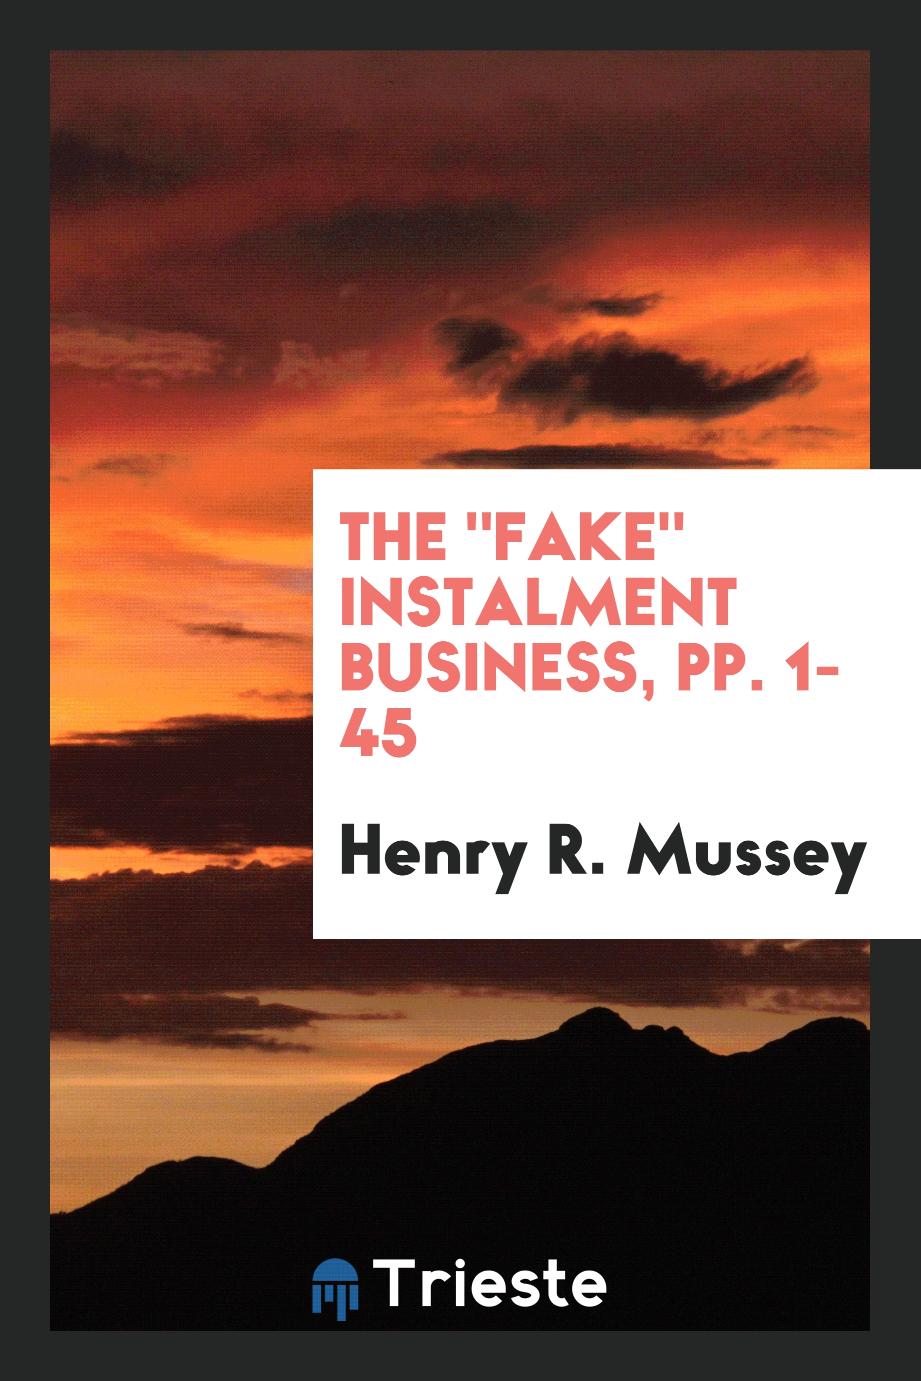 The "fake" Instalment Business, pp. 1-45